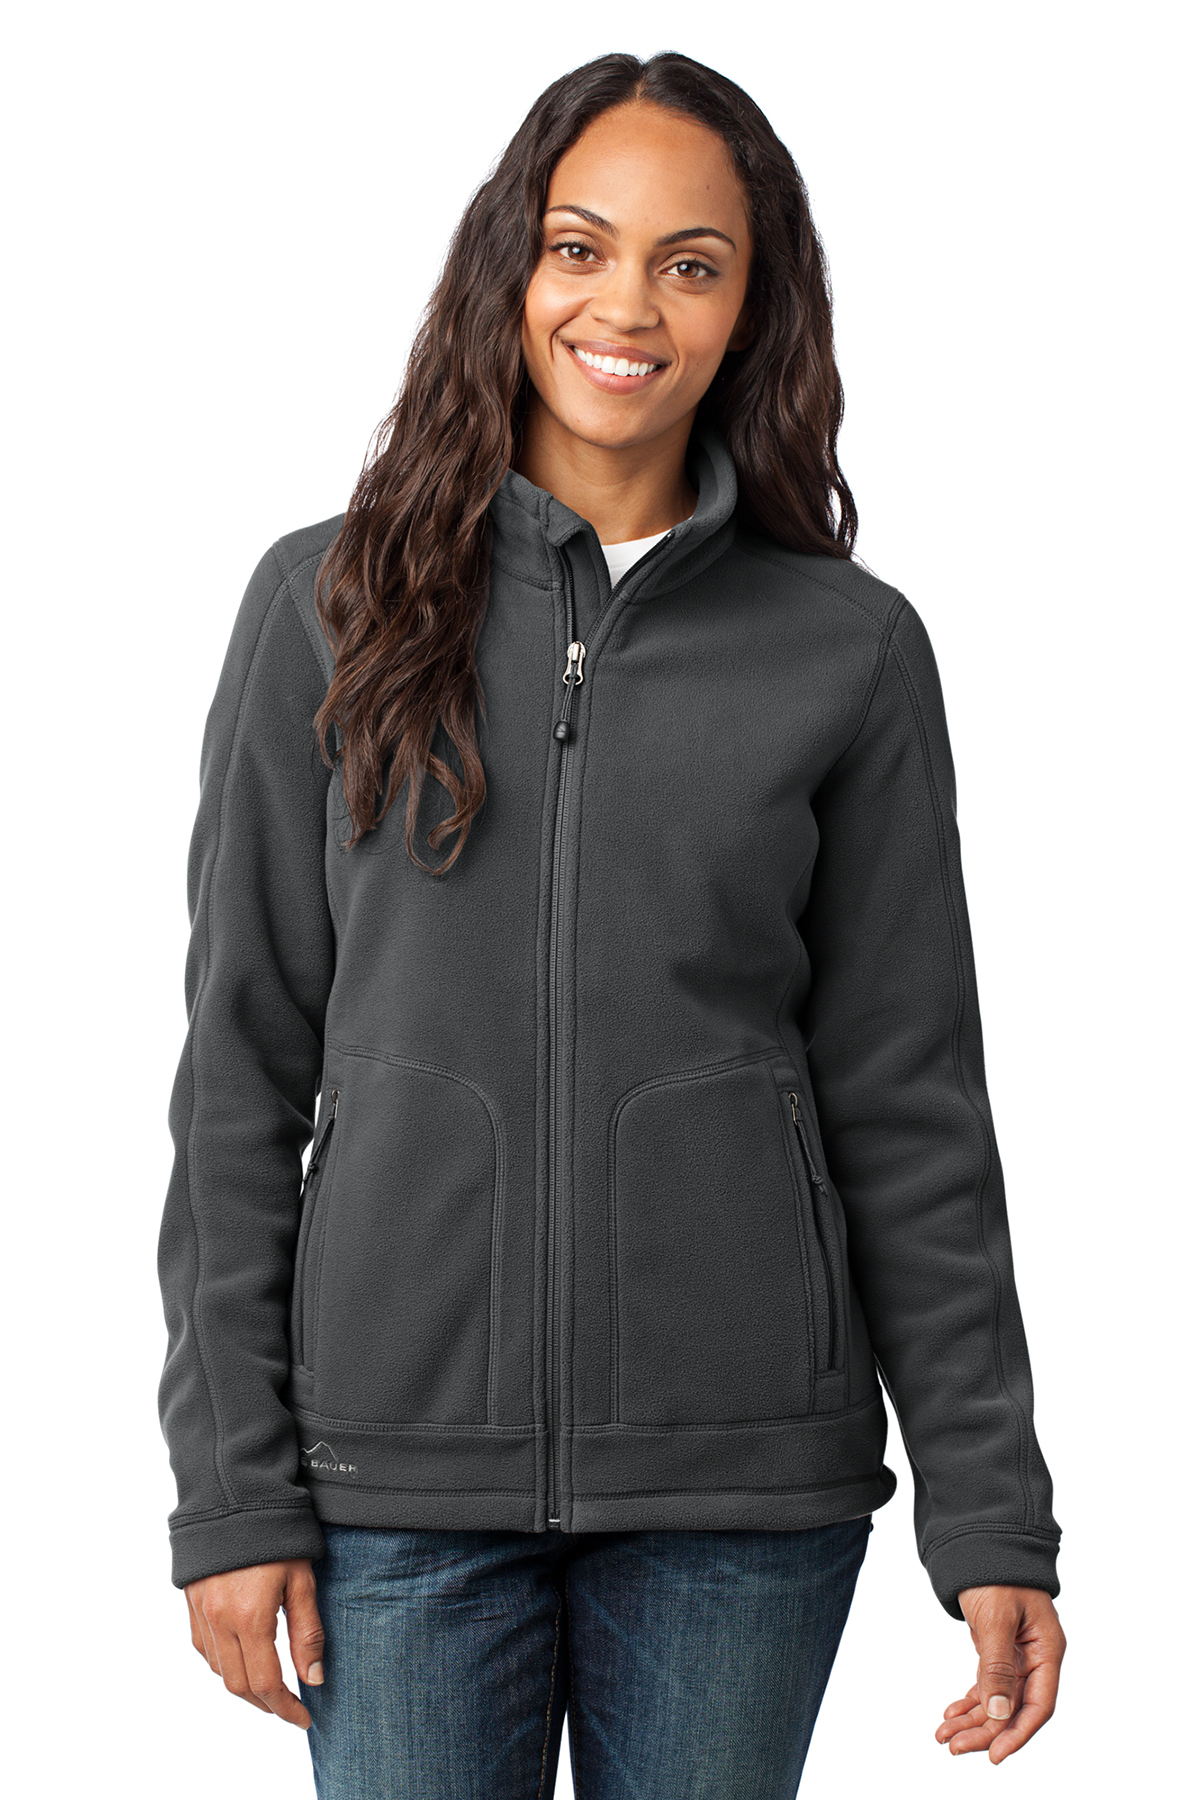 Eddie Bauer - Ladies Wind-Resistant Full-Zip Fleece Jacket